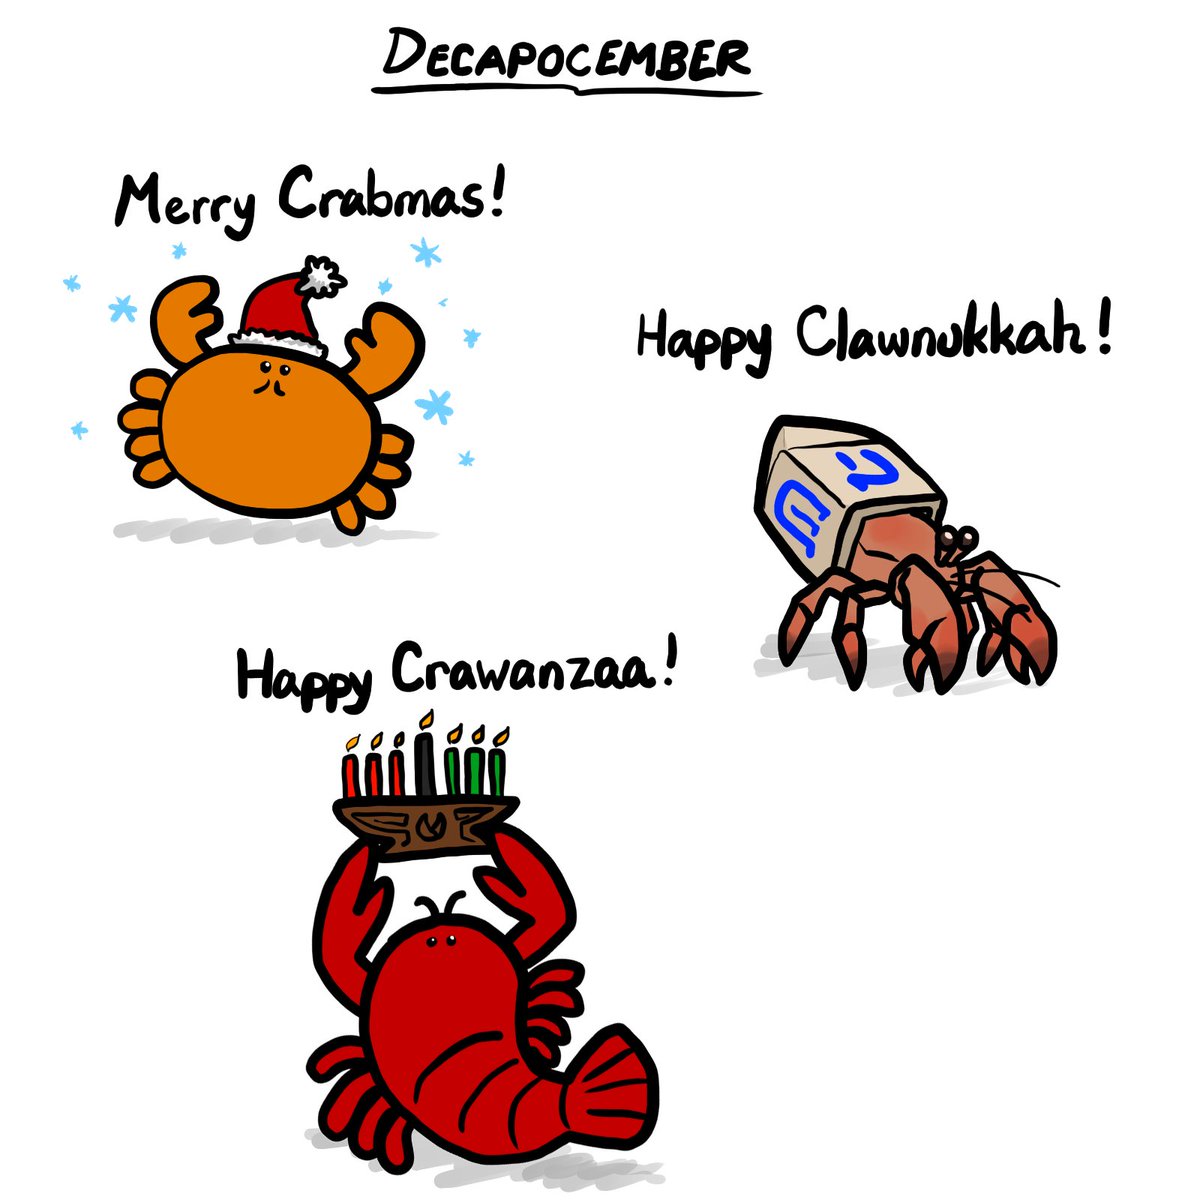 December is for Decapods!
#decapocember #happyholidays #crab #lobster #hermitcrab #decapoda #crustacean #art